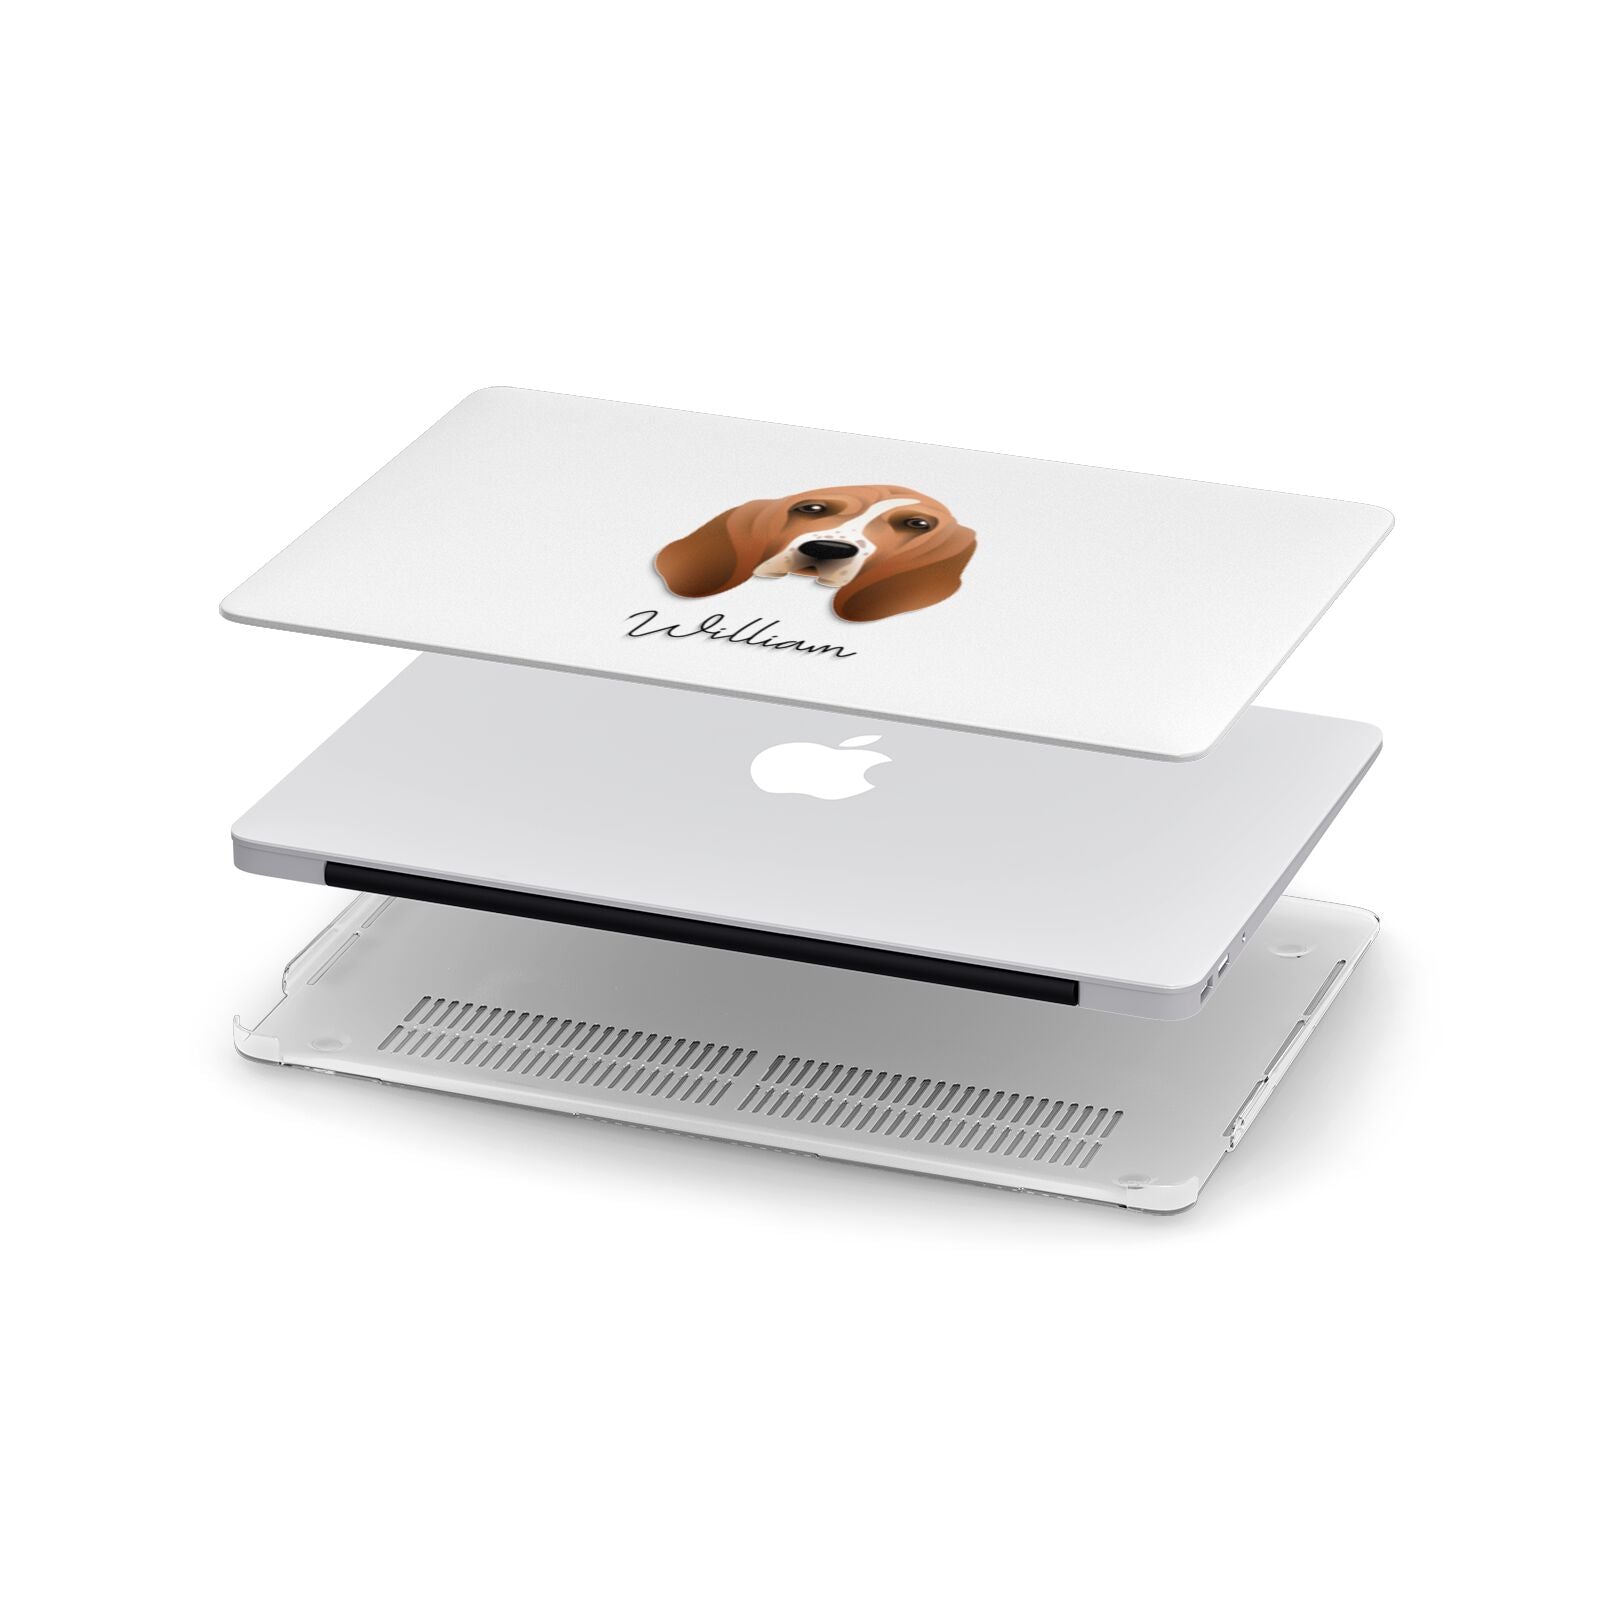 Basset Hound Personalised Apple MacBook Case in Detail